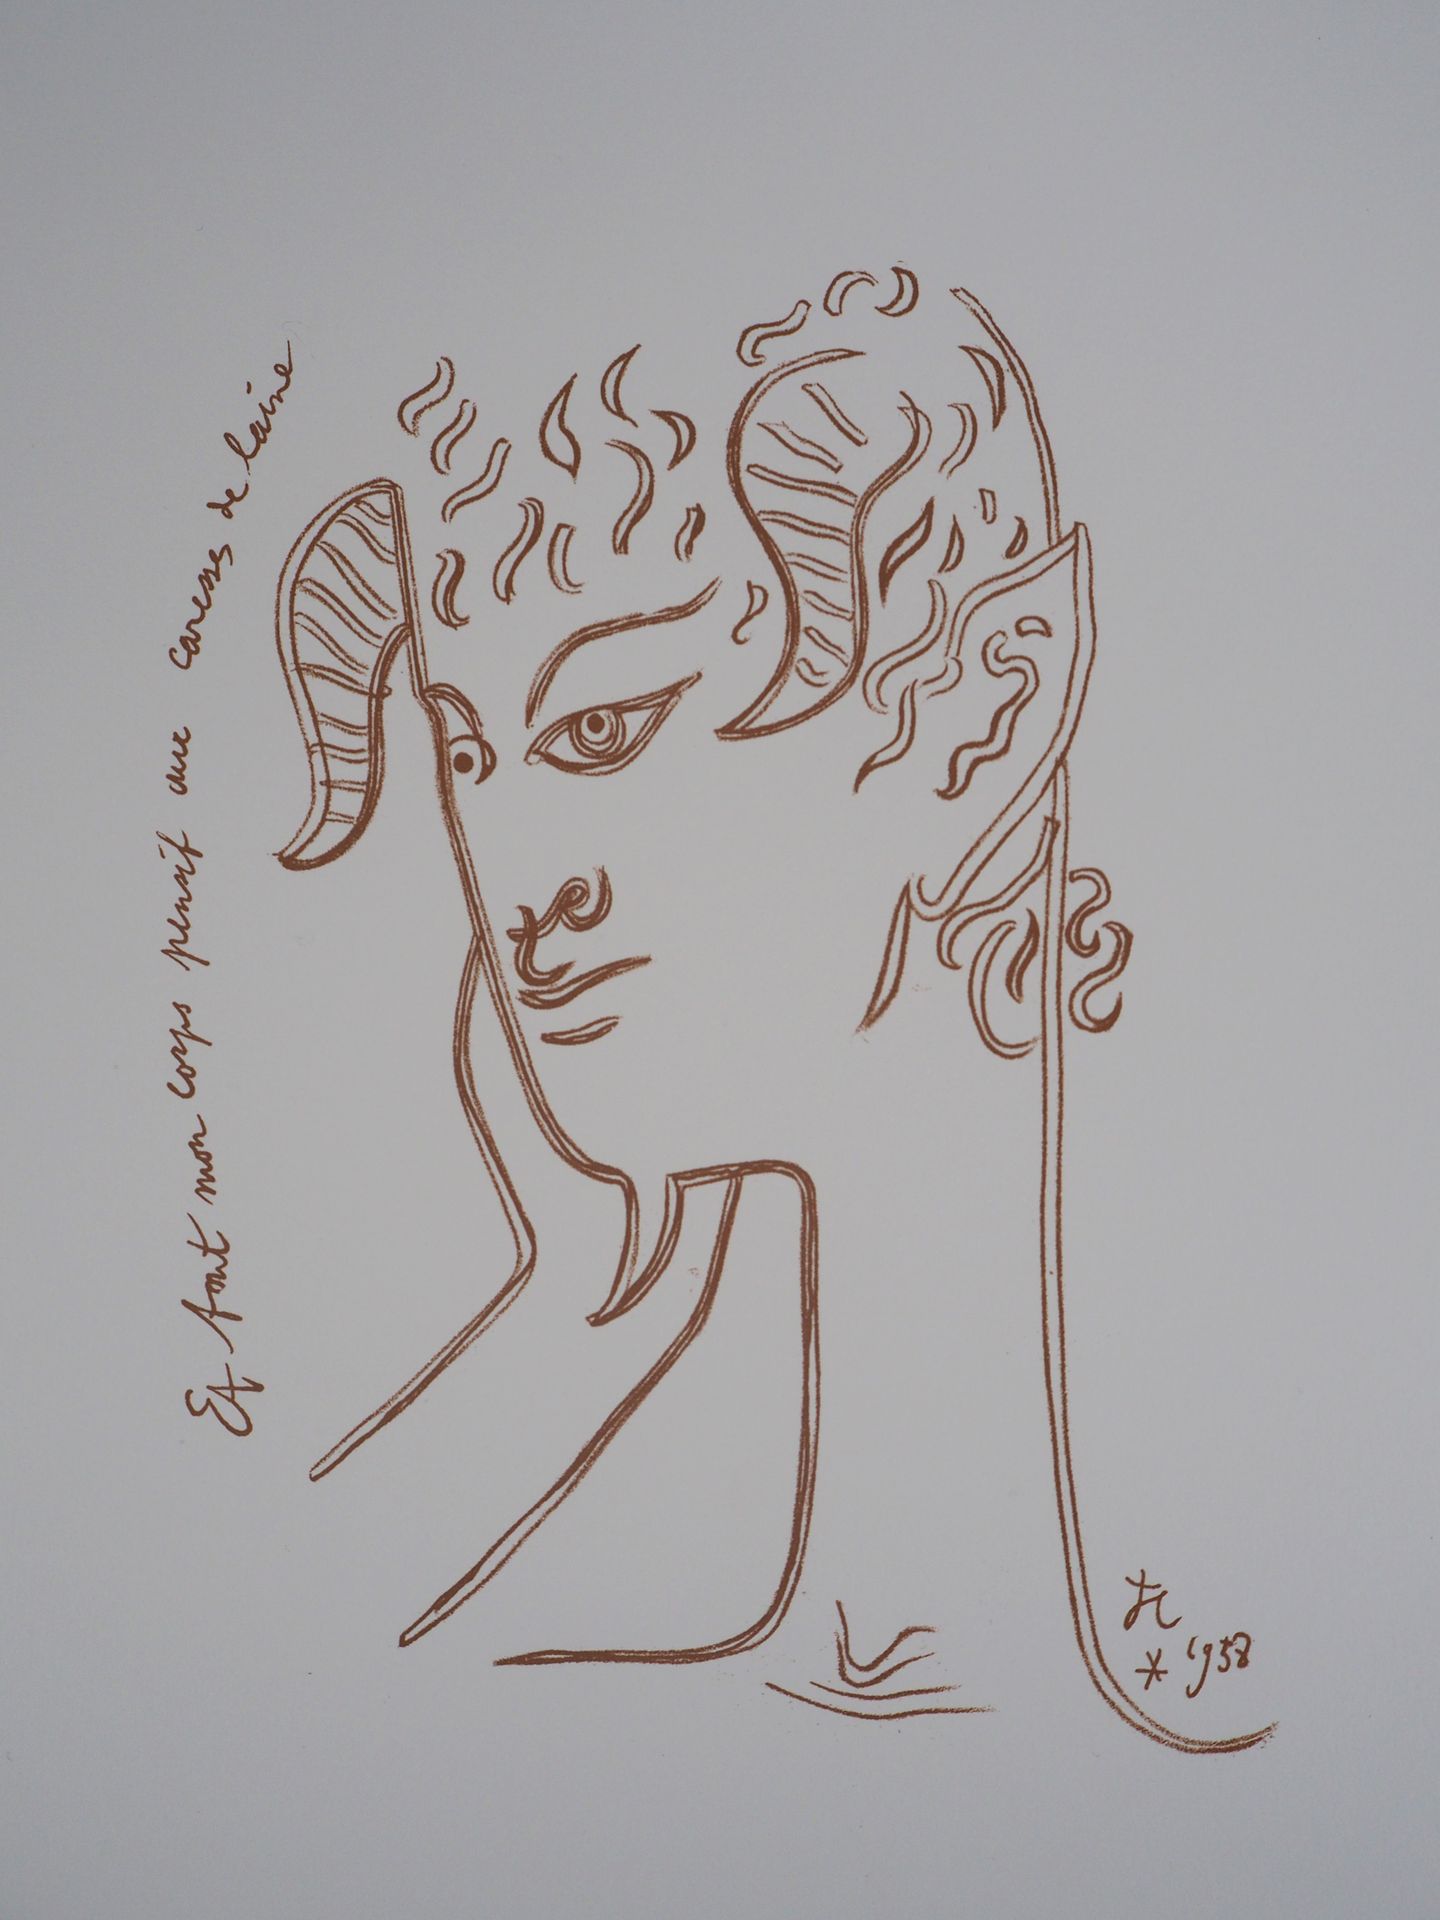 JEAN COCTEAU Jean COCTEAU

做梦的小鹿

石版画

在盘子里有签名的字样

梭织纸上 38.2 x 28.6 cm

状况极佳